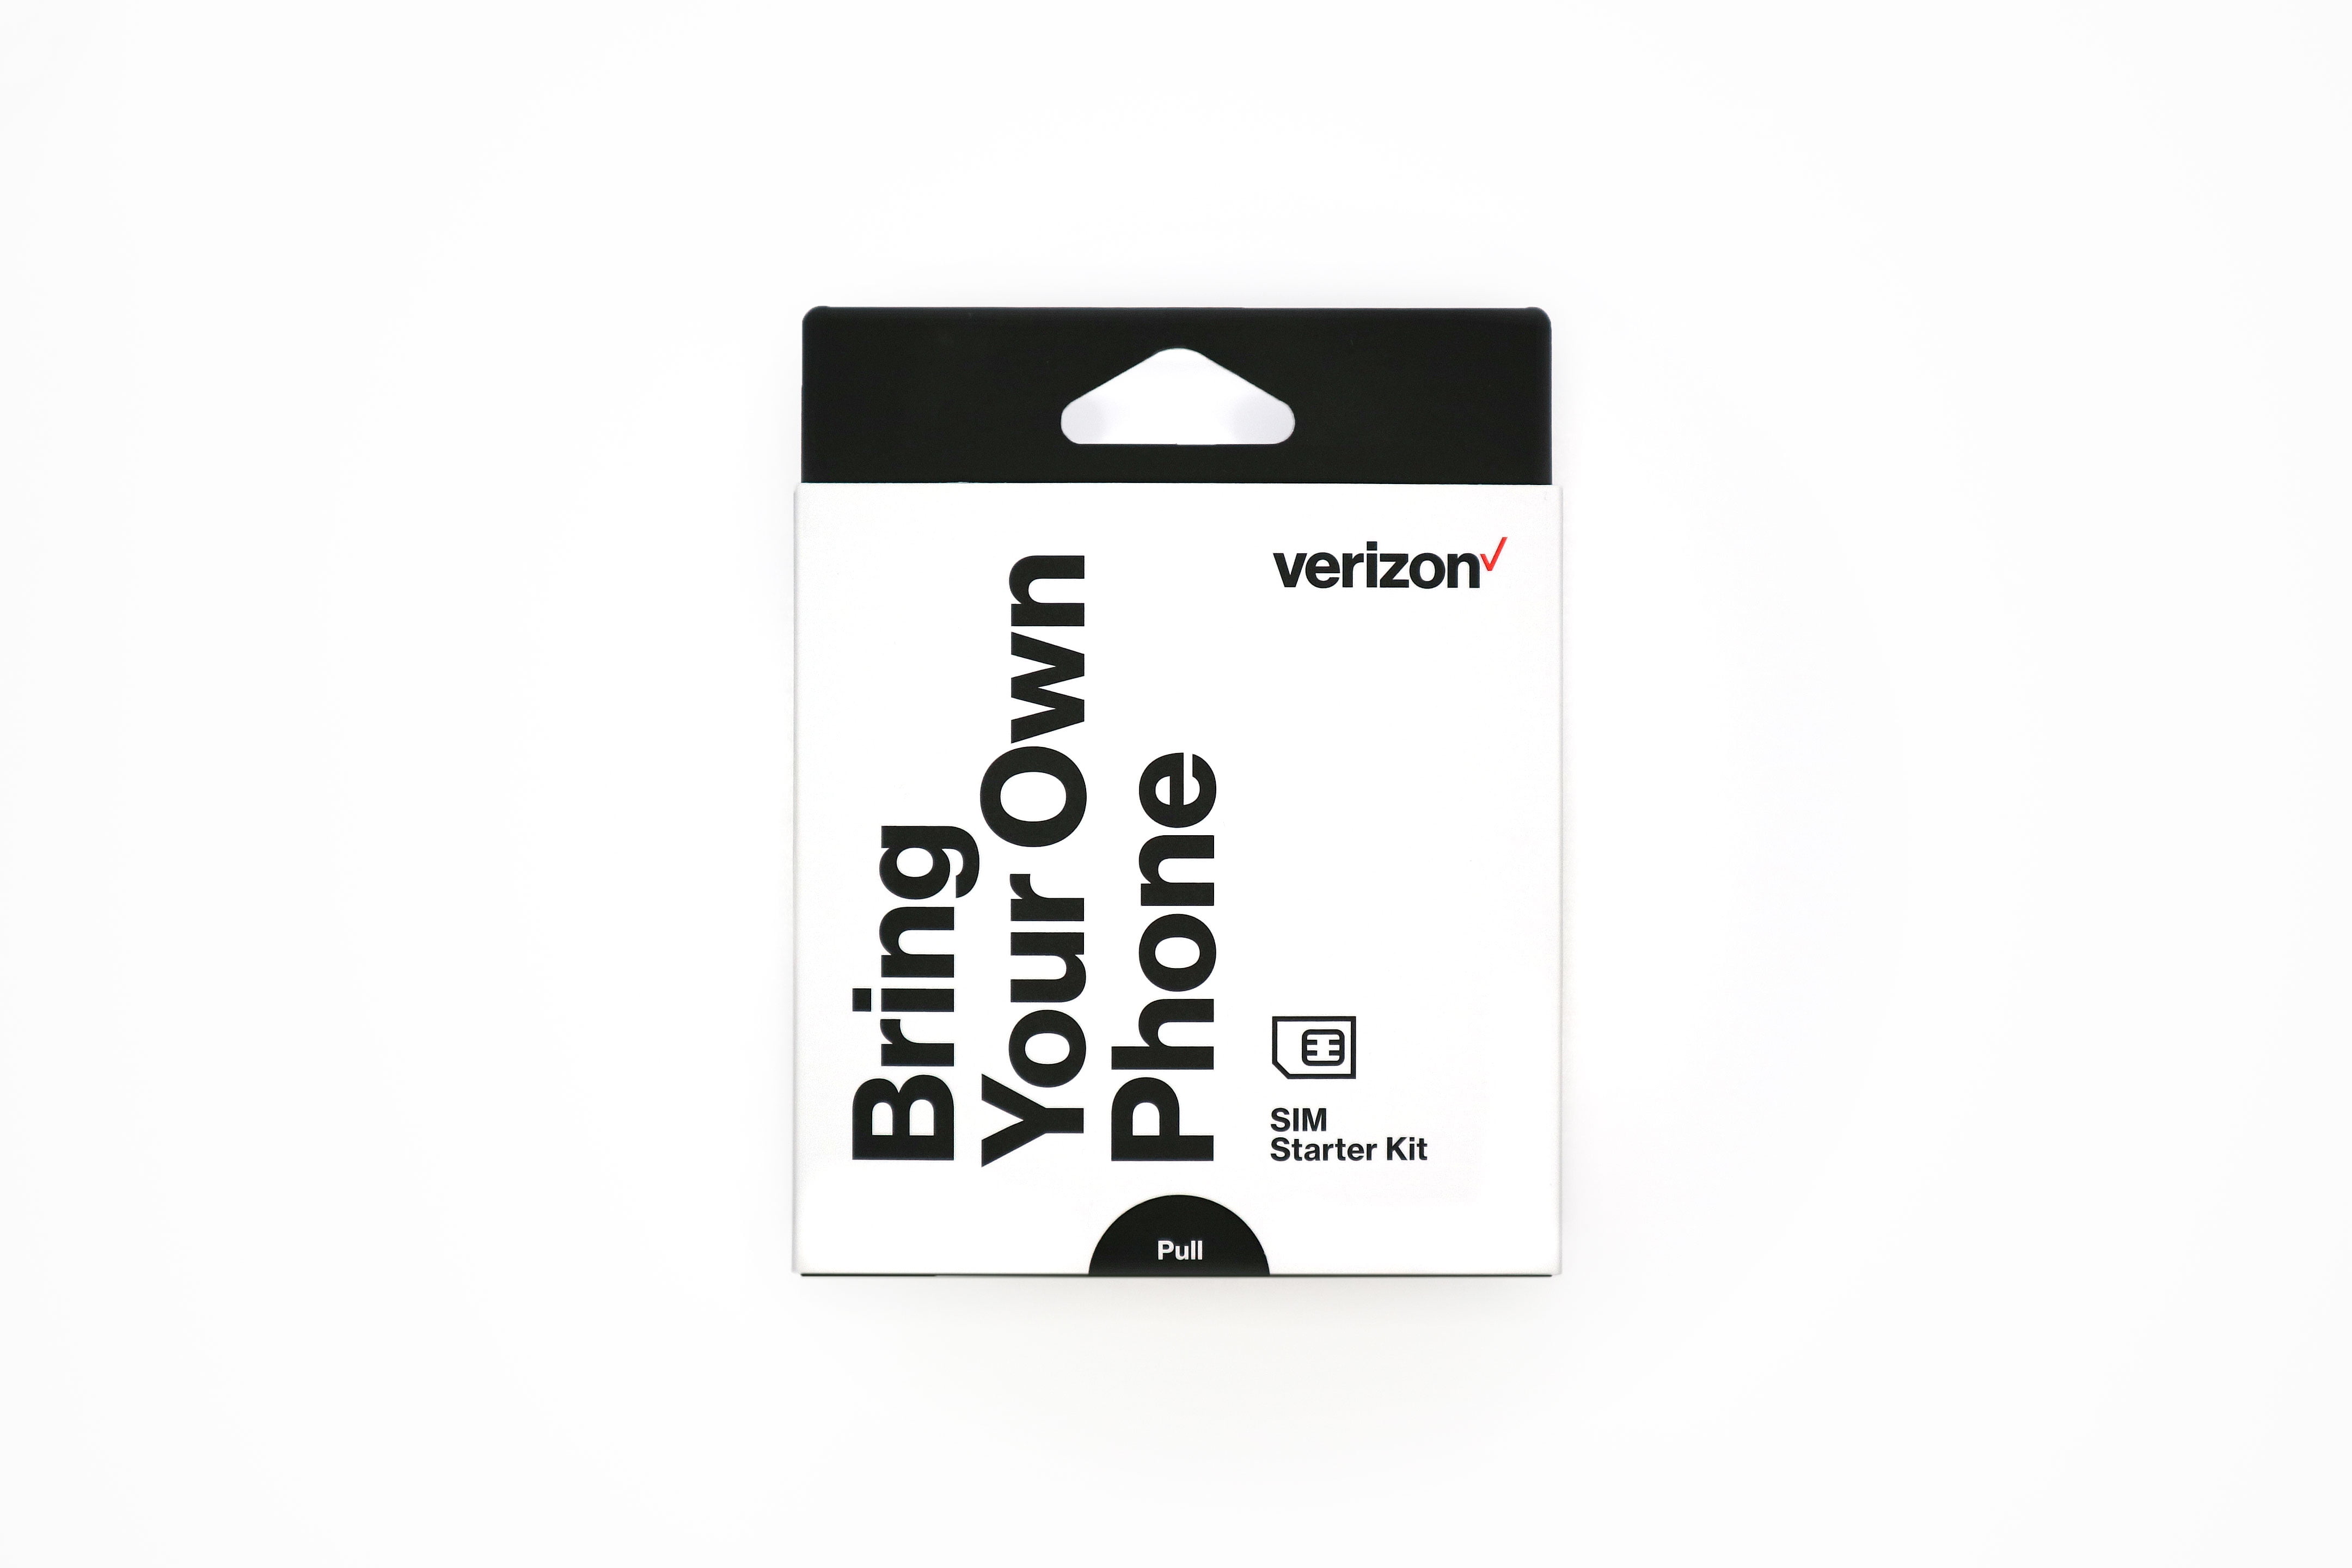 Verizon BYOD - Bring Your Own Device Sim Kit, Black